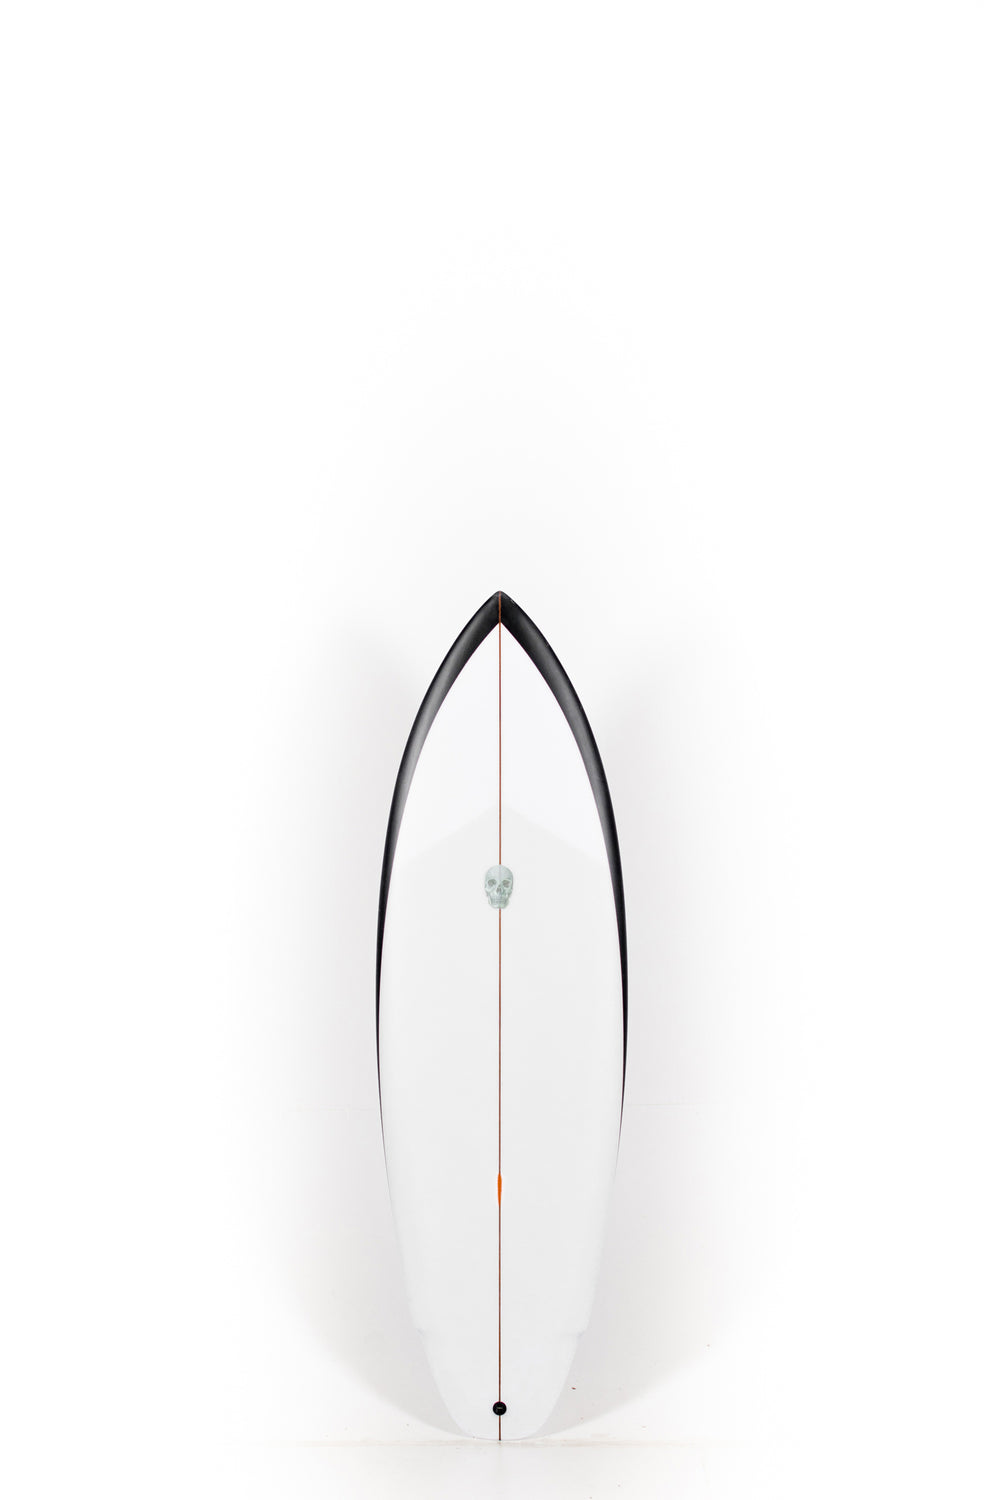 Pukas Surf shop - Christenson Surfboards - LANE SPLITTER - 5'4